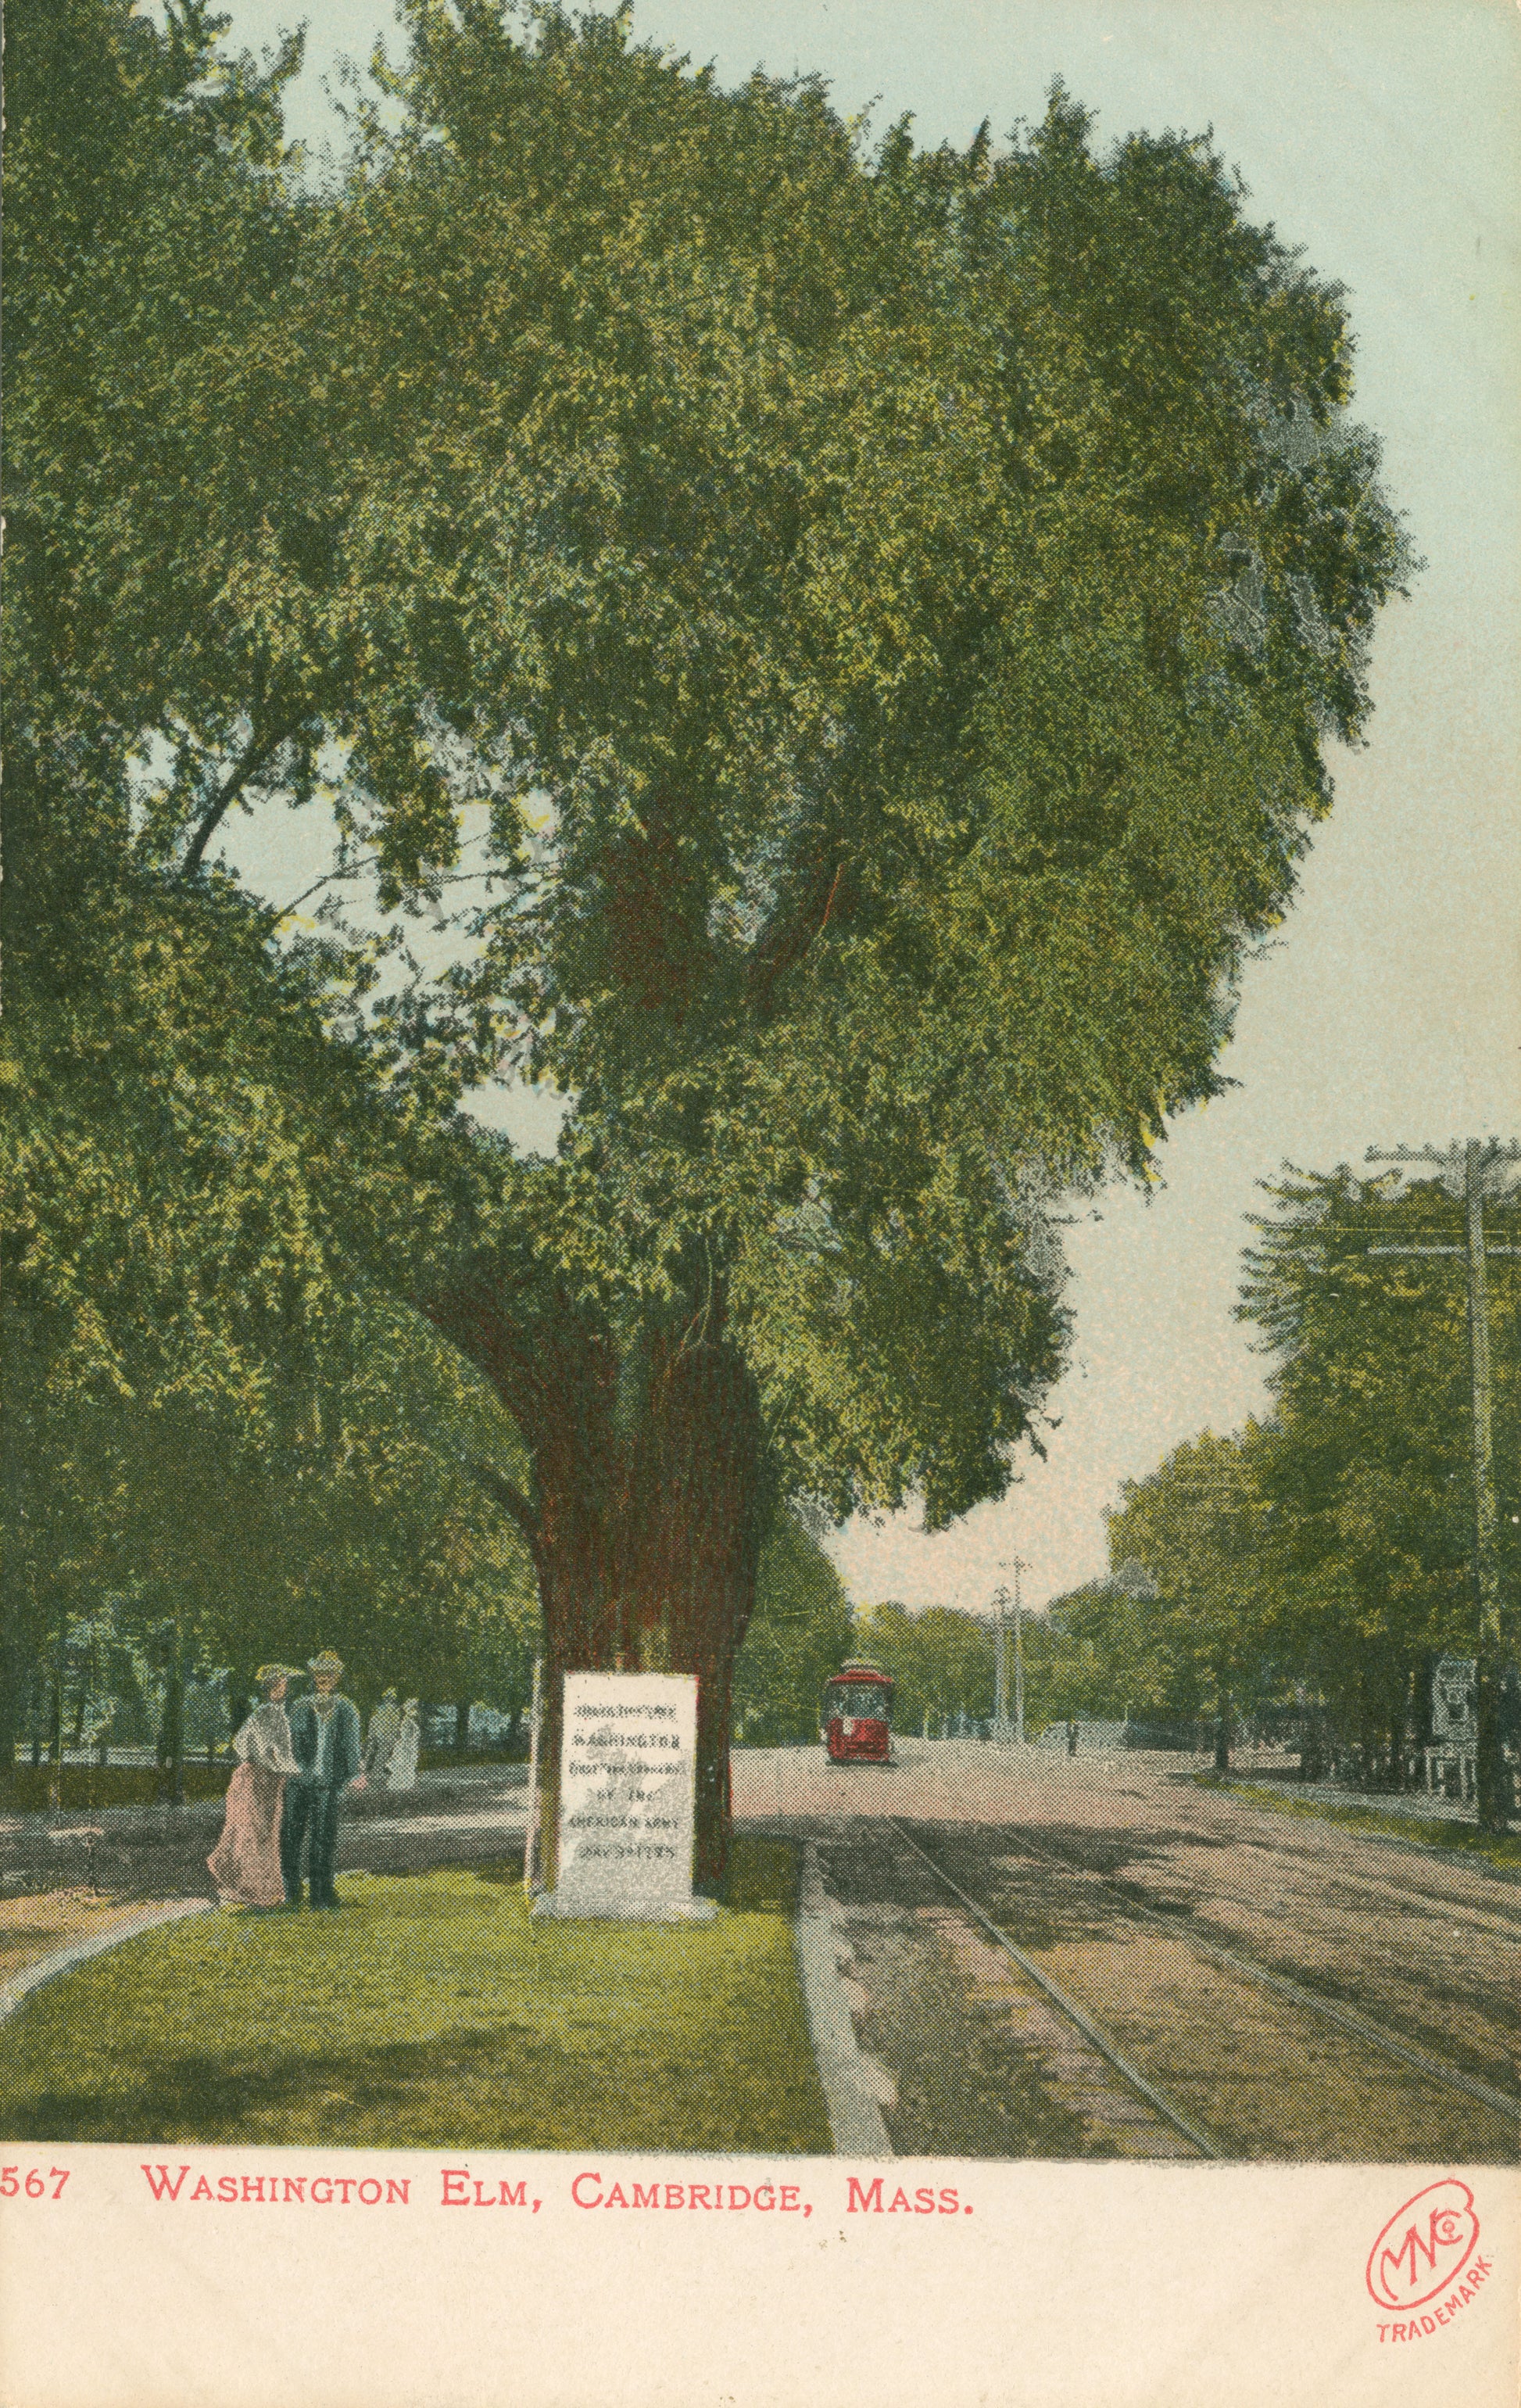 Vintage Postcard: Washington Elm in Cambridge Showing Streetcar